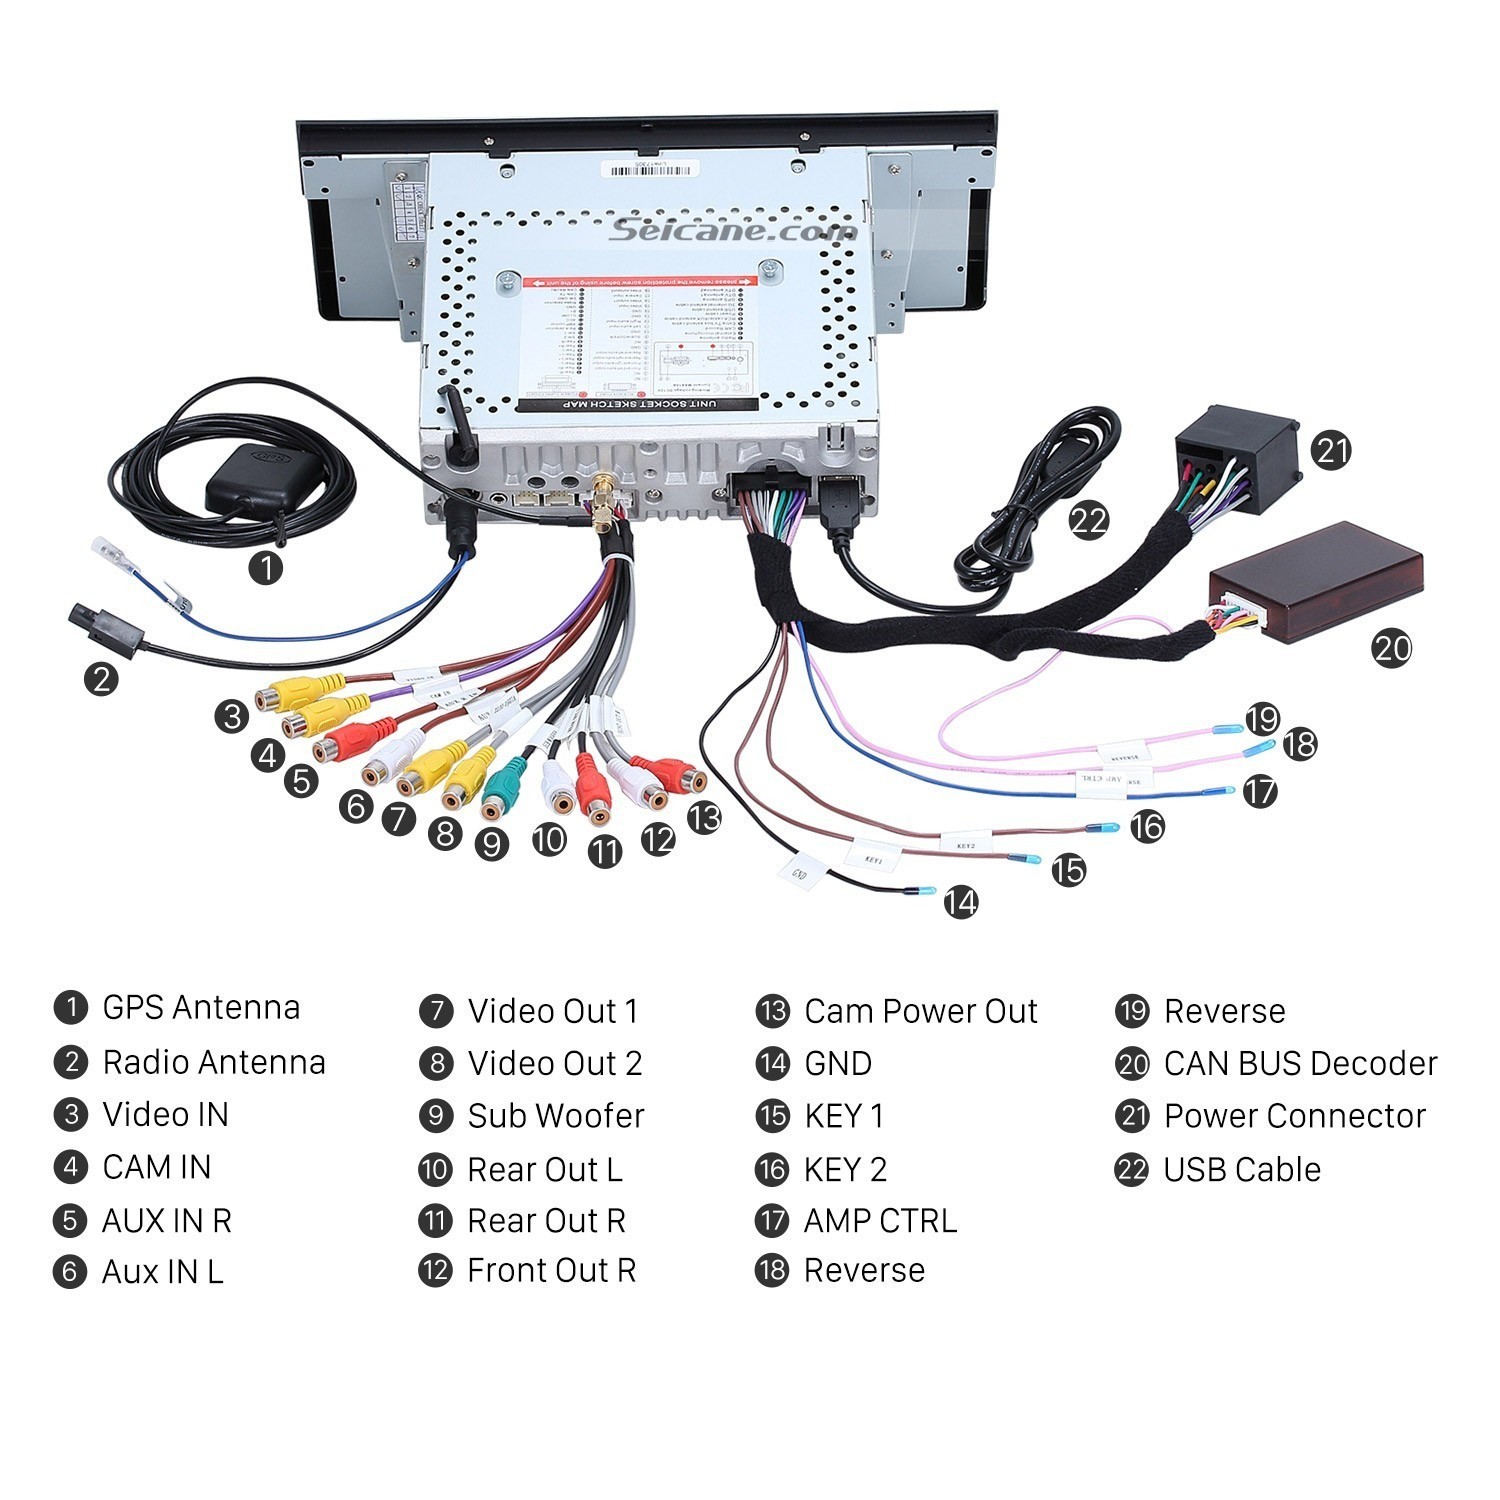 Ac Adapter Wiring Diagram Save Diagram Car Best Car Parts and Diagrams Insignia Se 2 0d